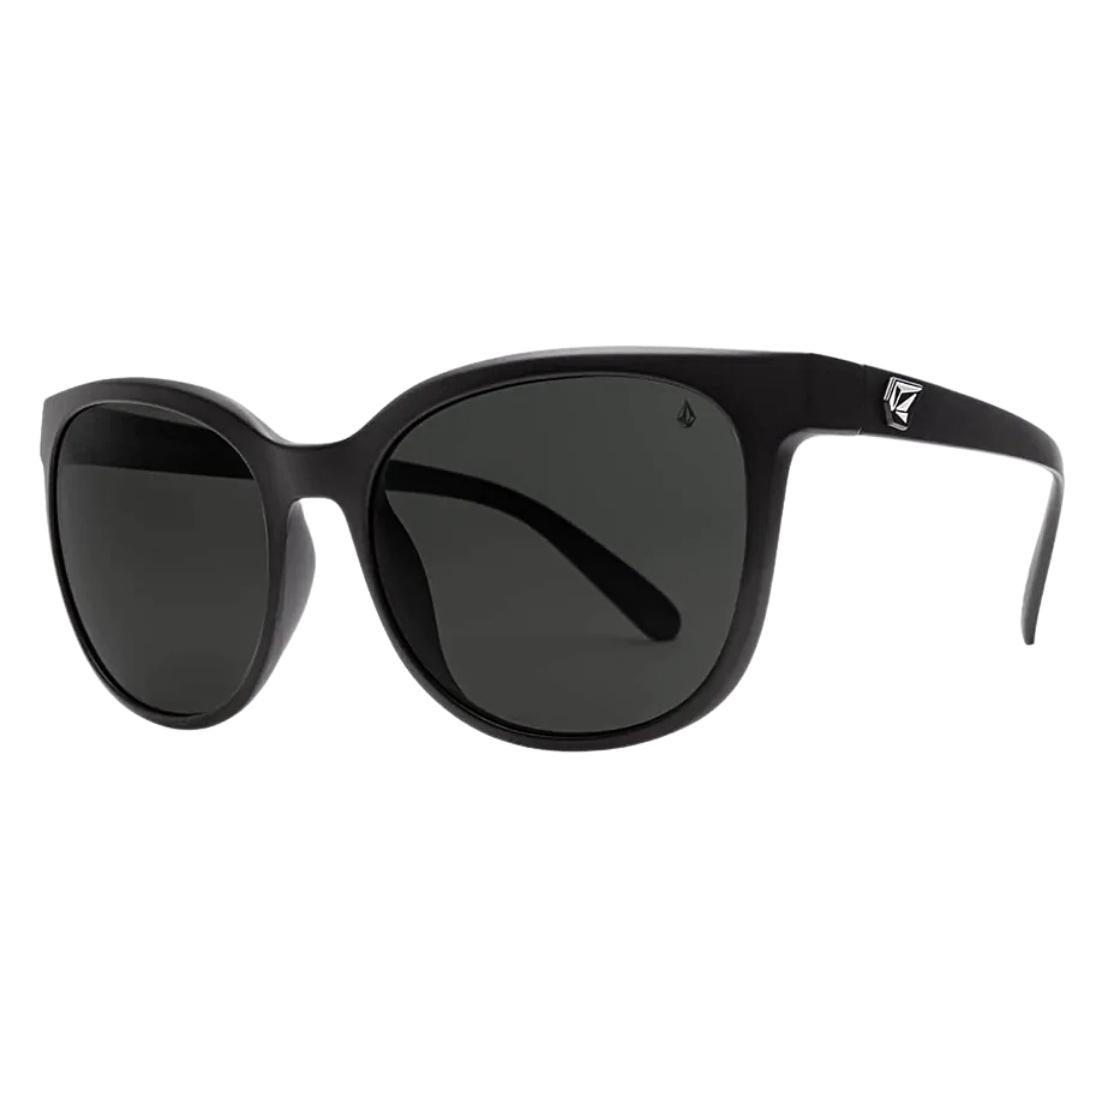 Volcom Garden Polarised Sunglasses - Matte Black/Gray Polar - Round Sunglasses by Volcom